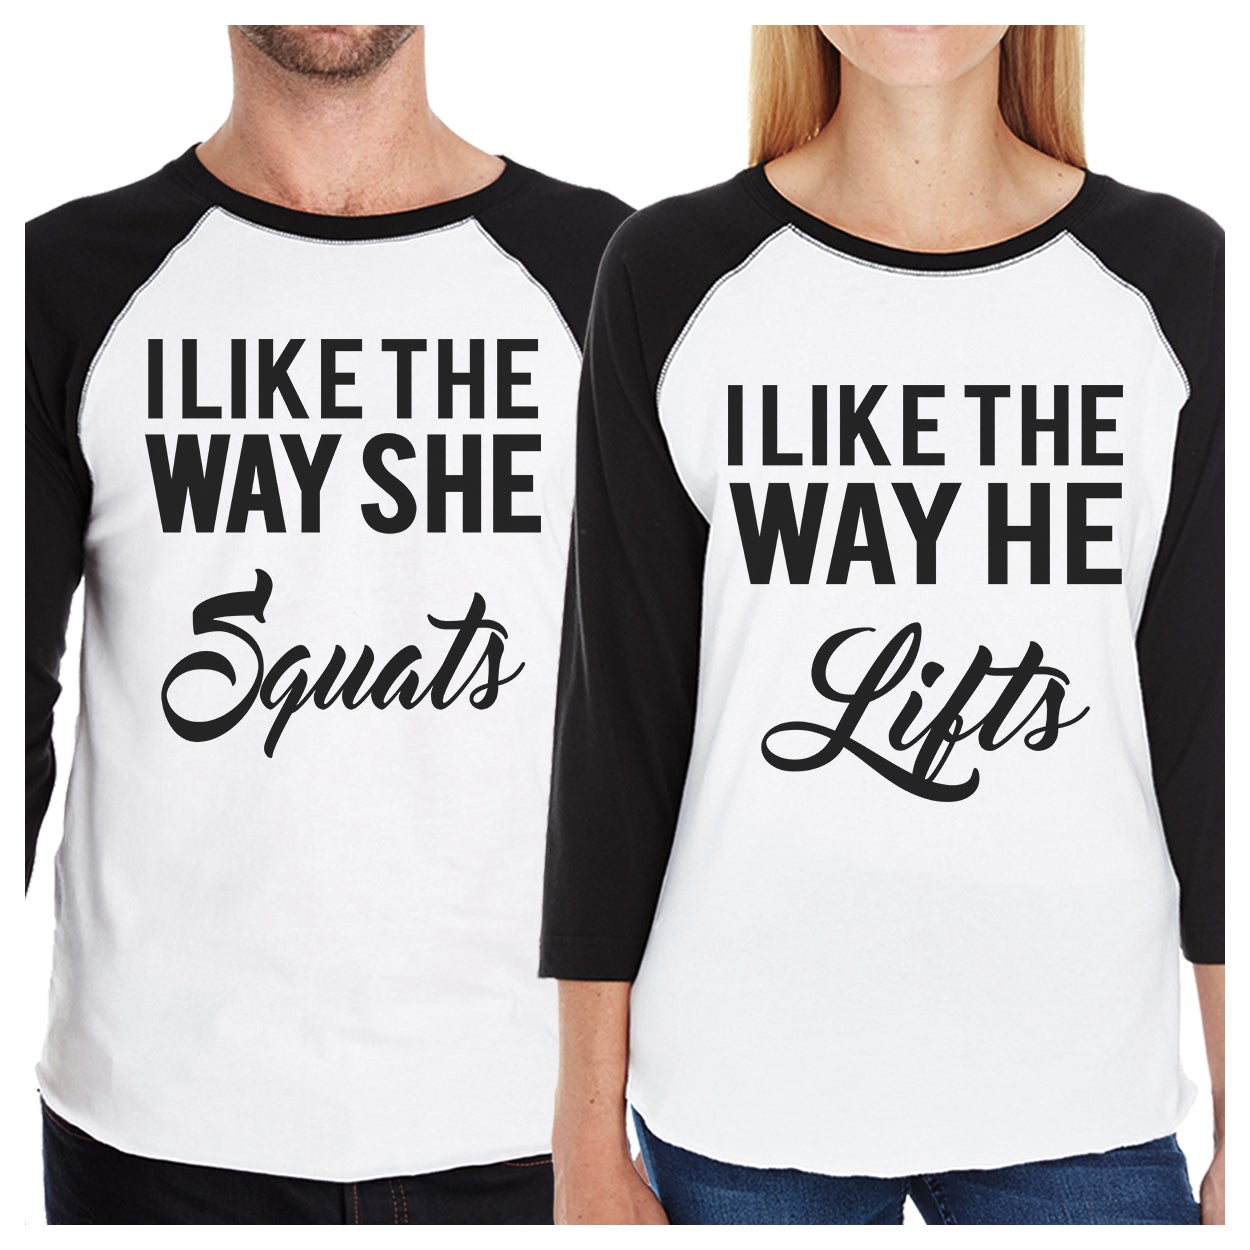 Squats Lifts Matching Couples Baseball Shirts Workout Gym T-Shirt Black and White